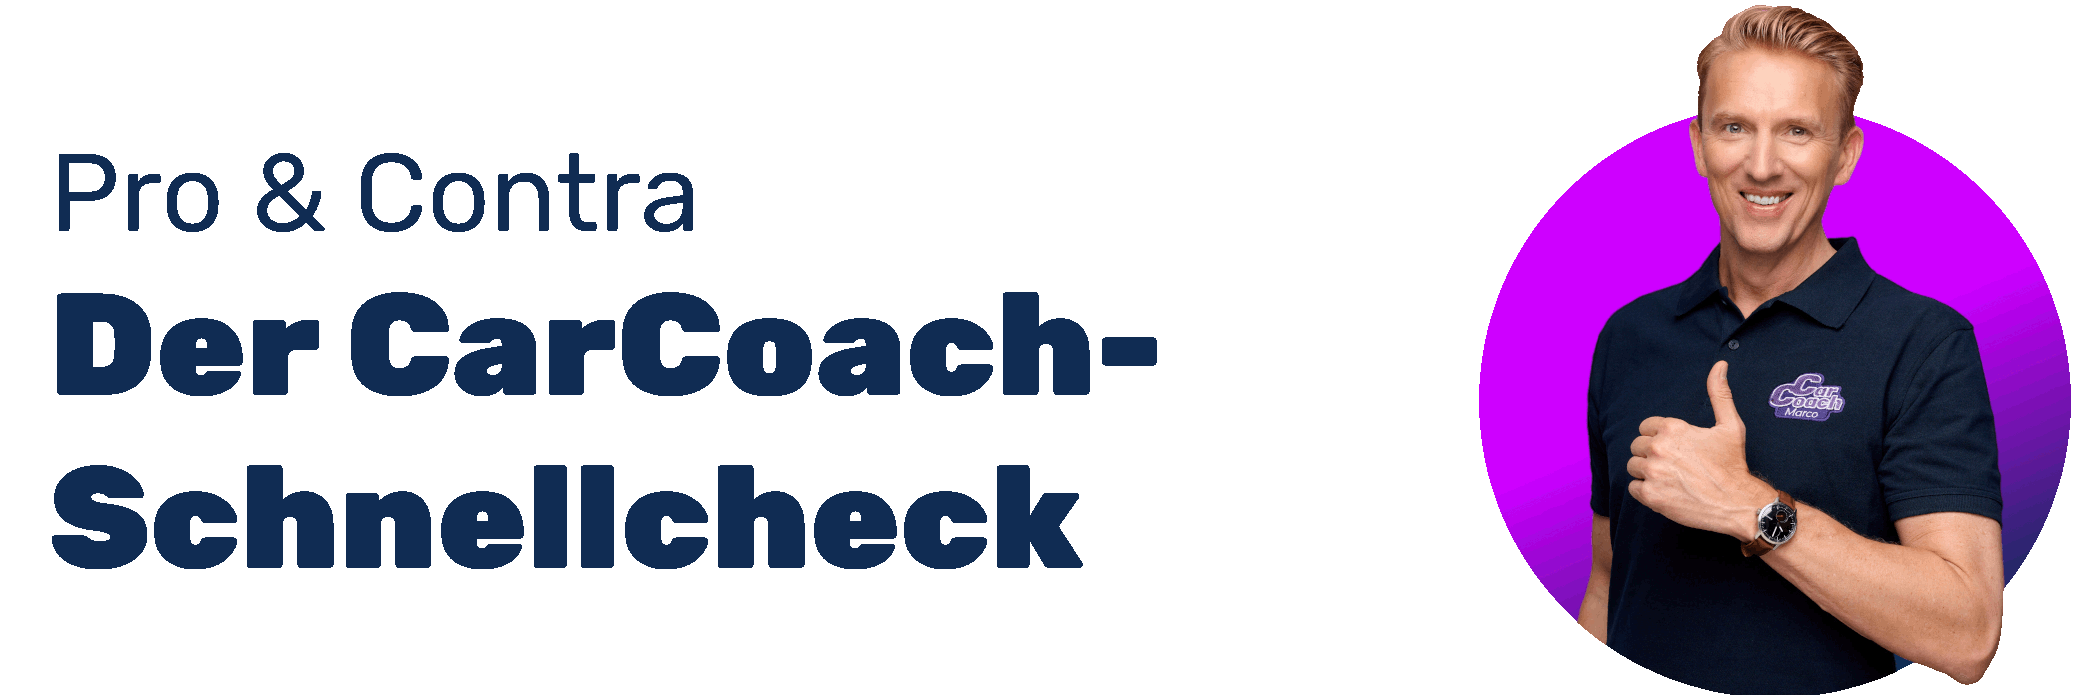 Testberichte - CarCoach-Schnellcheck - Pro & Contra - Marco